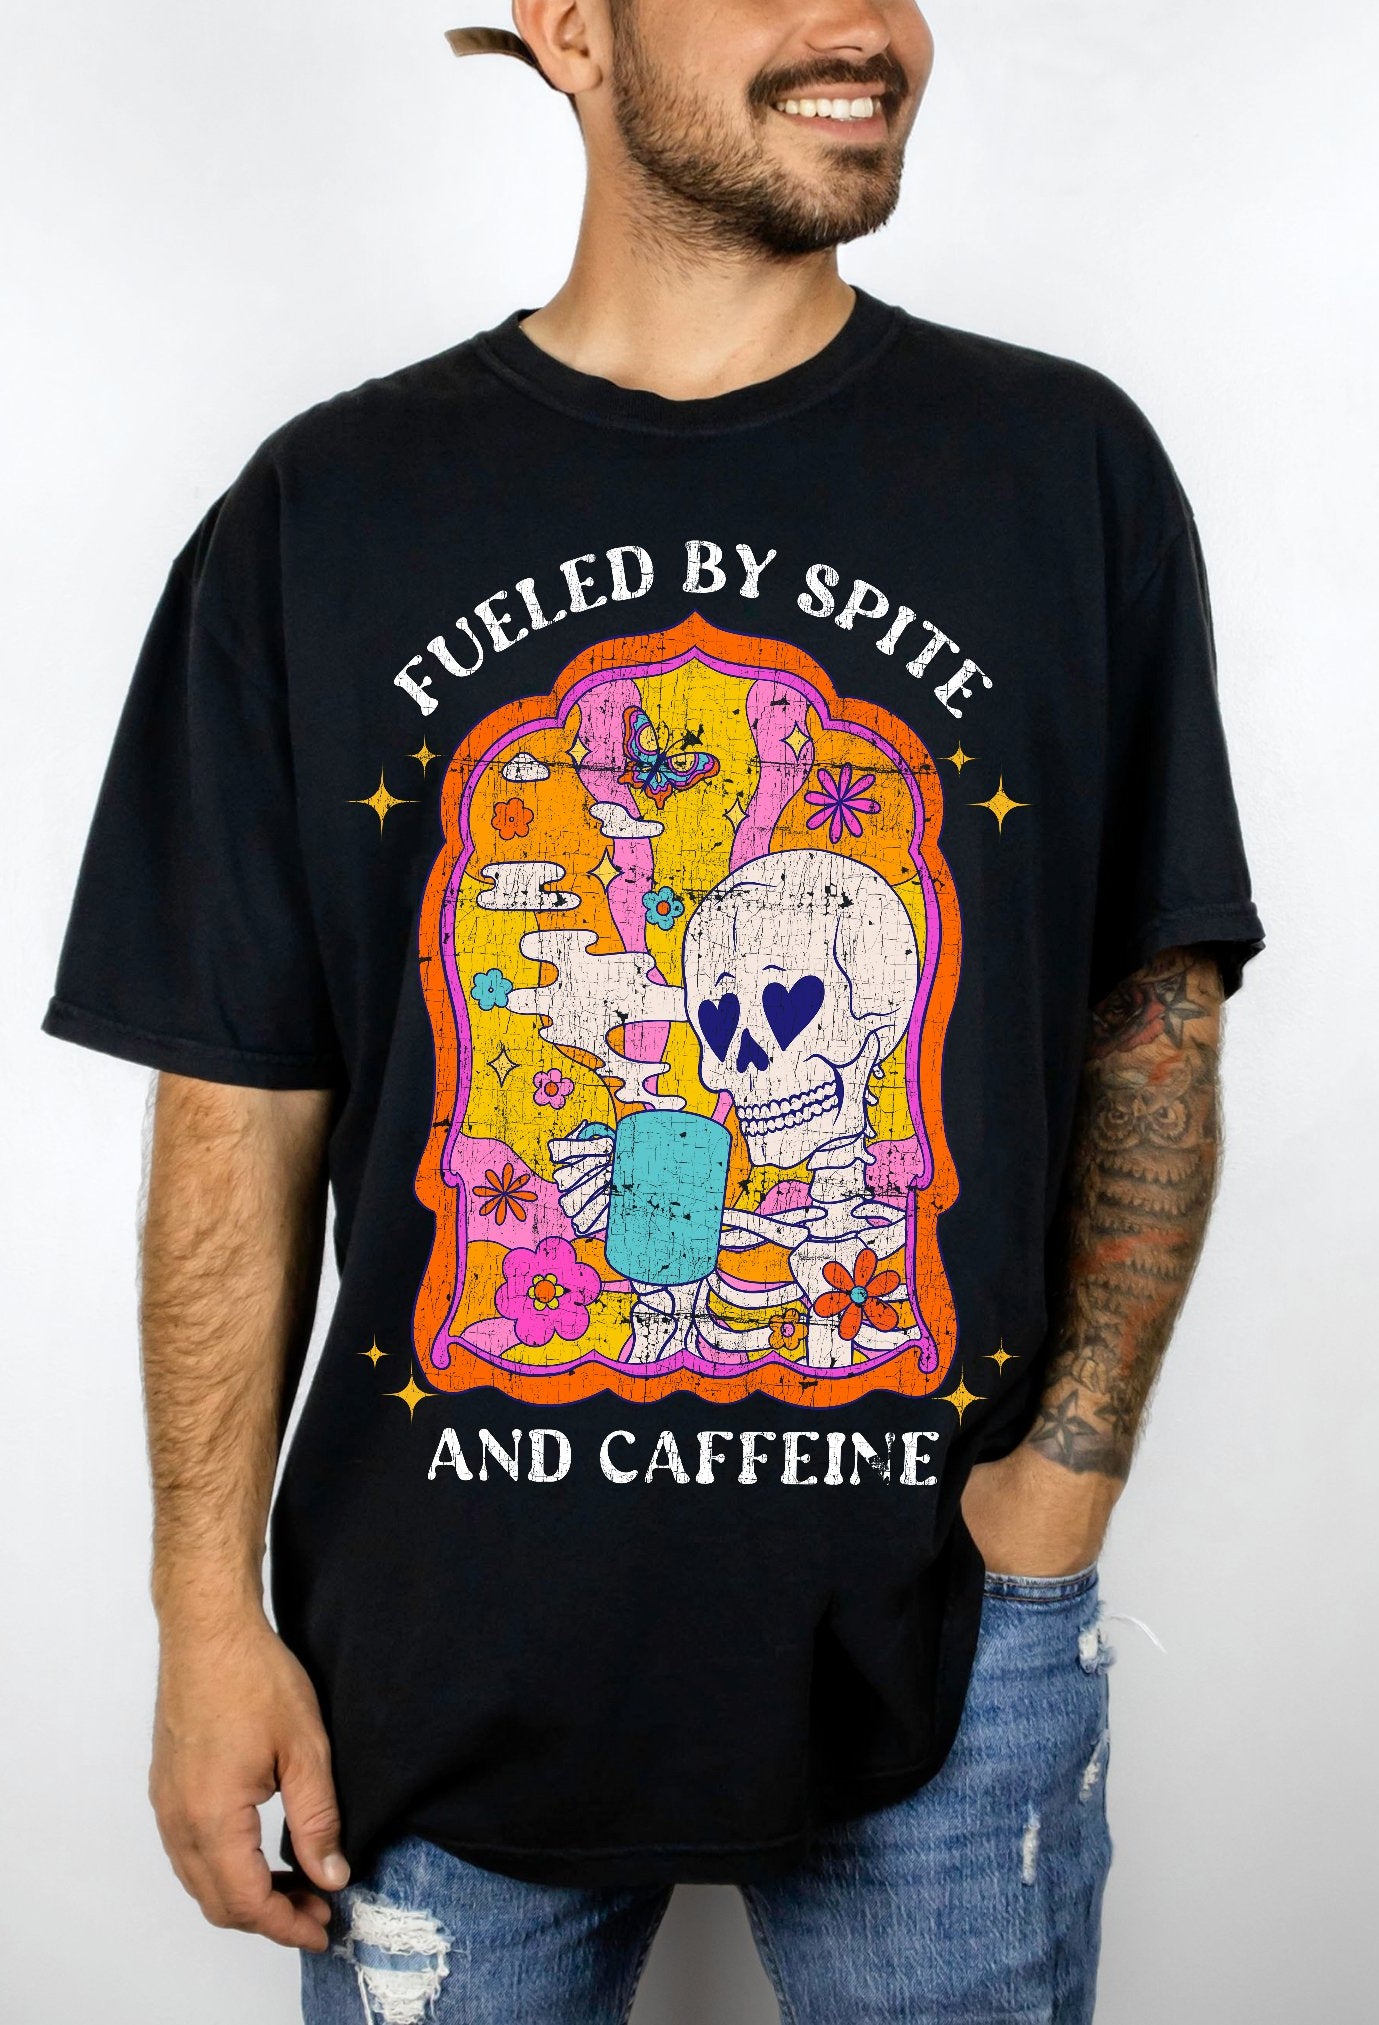 Fueled By Spite And Caffeine Mens Tee - UntamedEgo LLC.